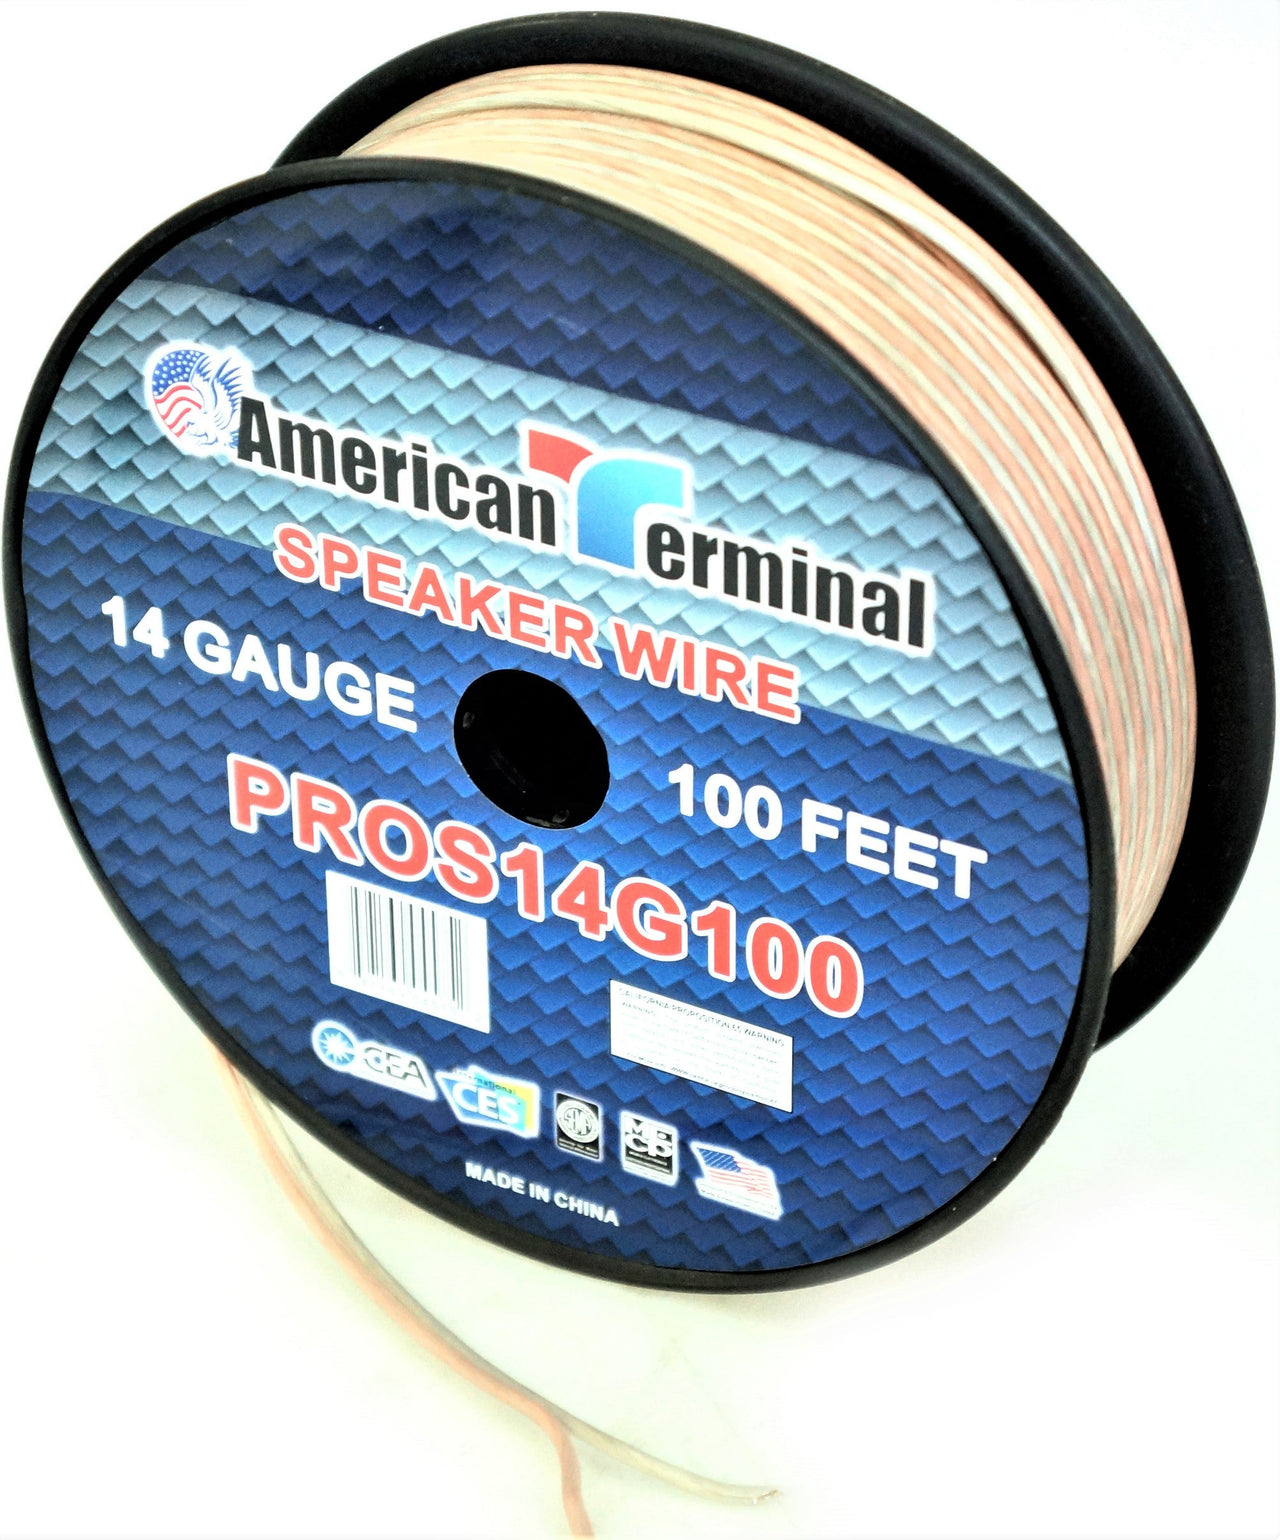 American Terminal PROS14100 14 Gauge Speaker Wire 100' 14 Gauge PRO PA DJ Car Home Marine Audio Speaker Wire Cable Spool